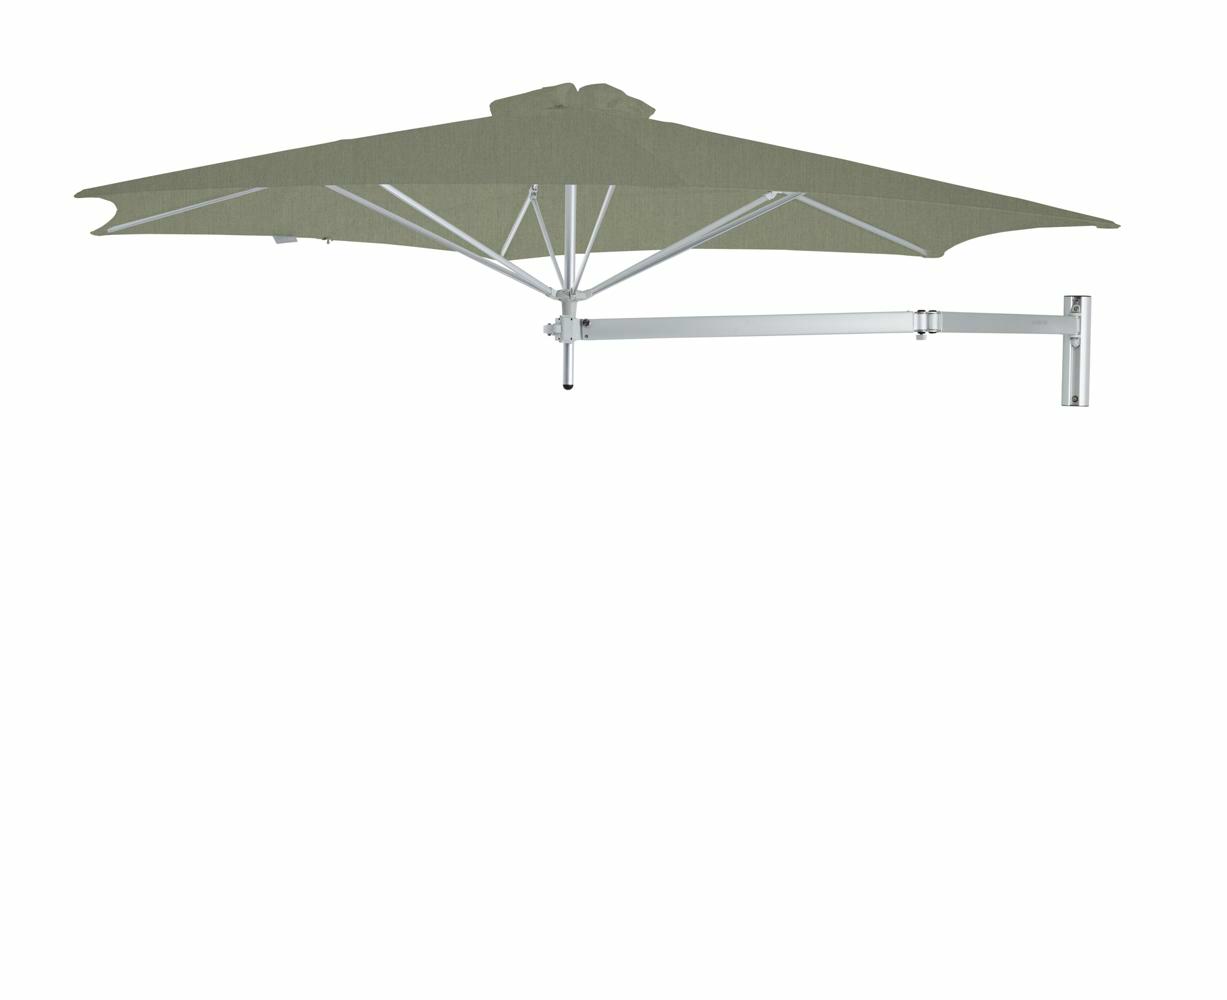 Paraflex canopy round 3 m in colour Almond